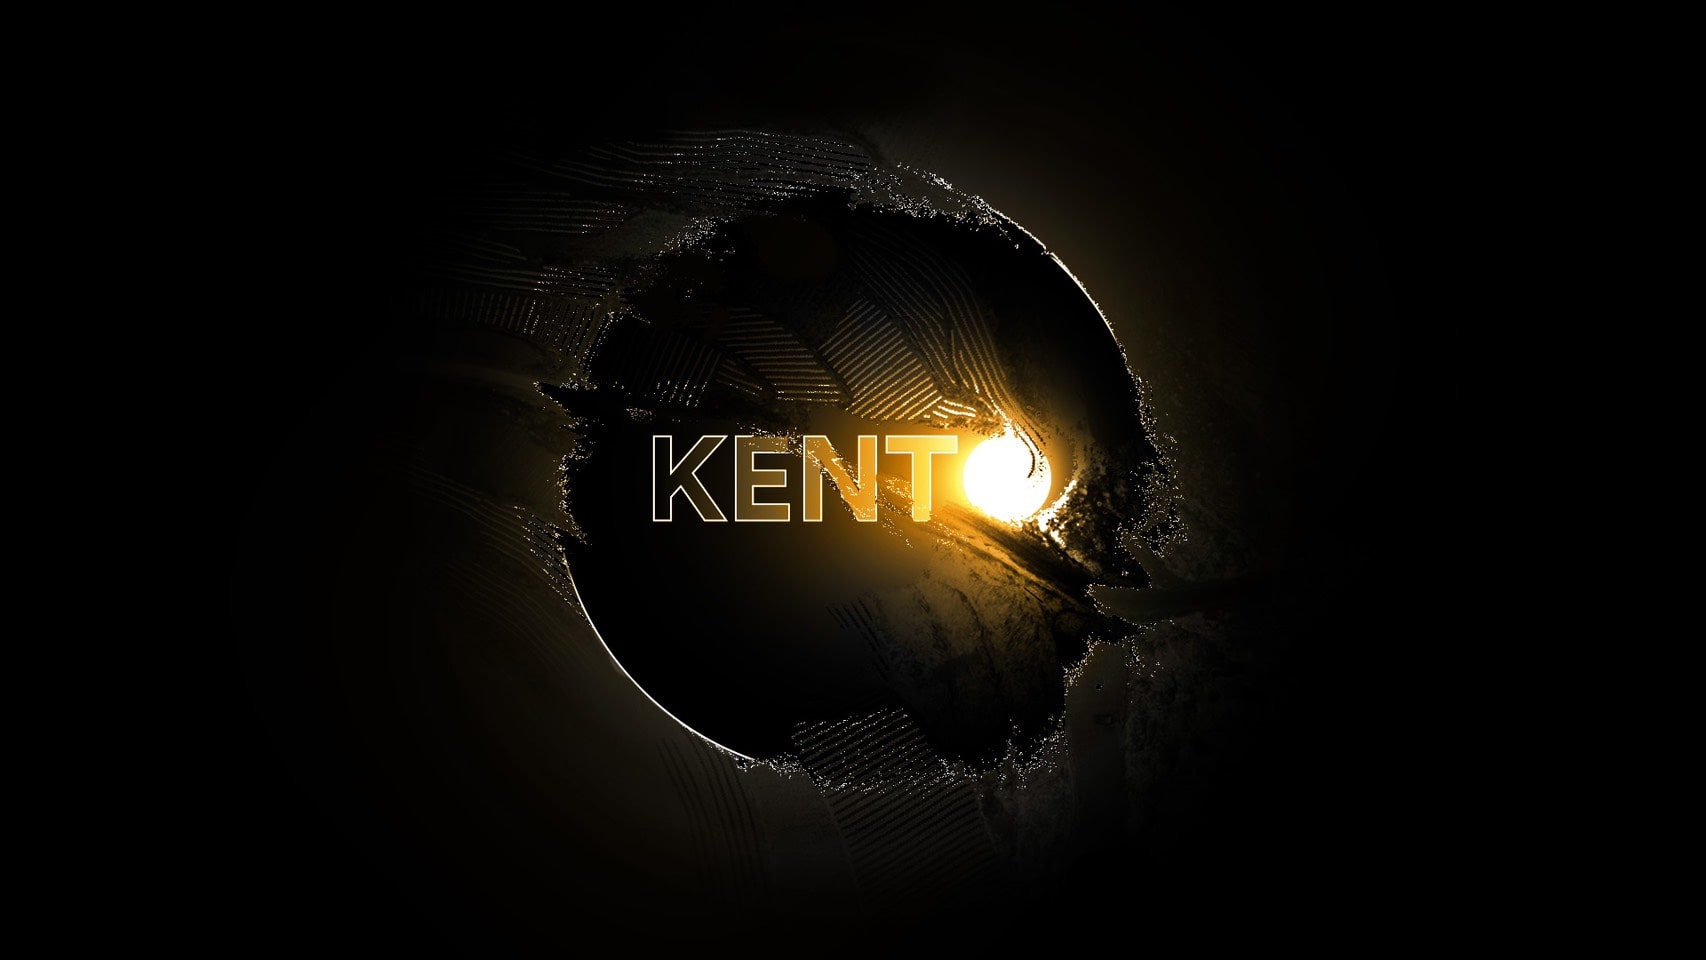 KENTO AR project - LAND